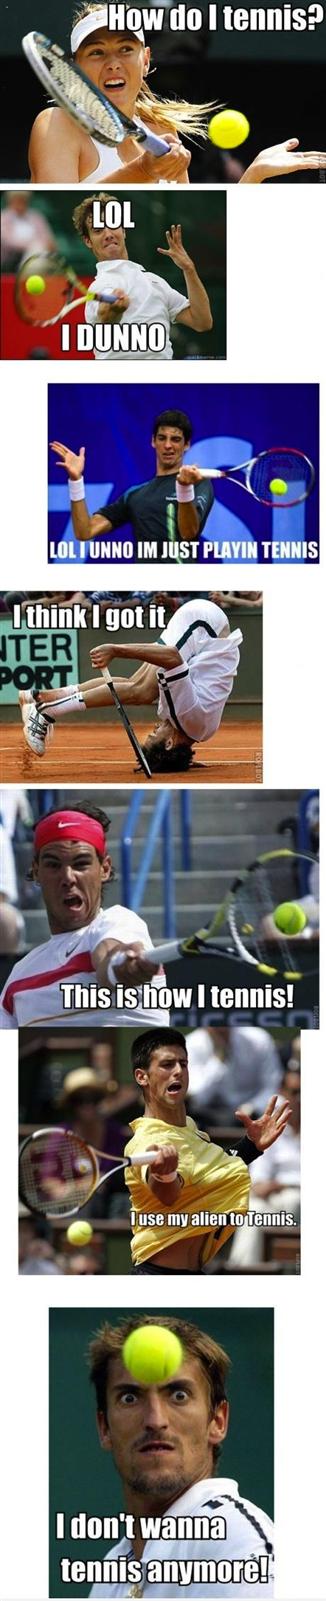 tennis - meme